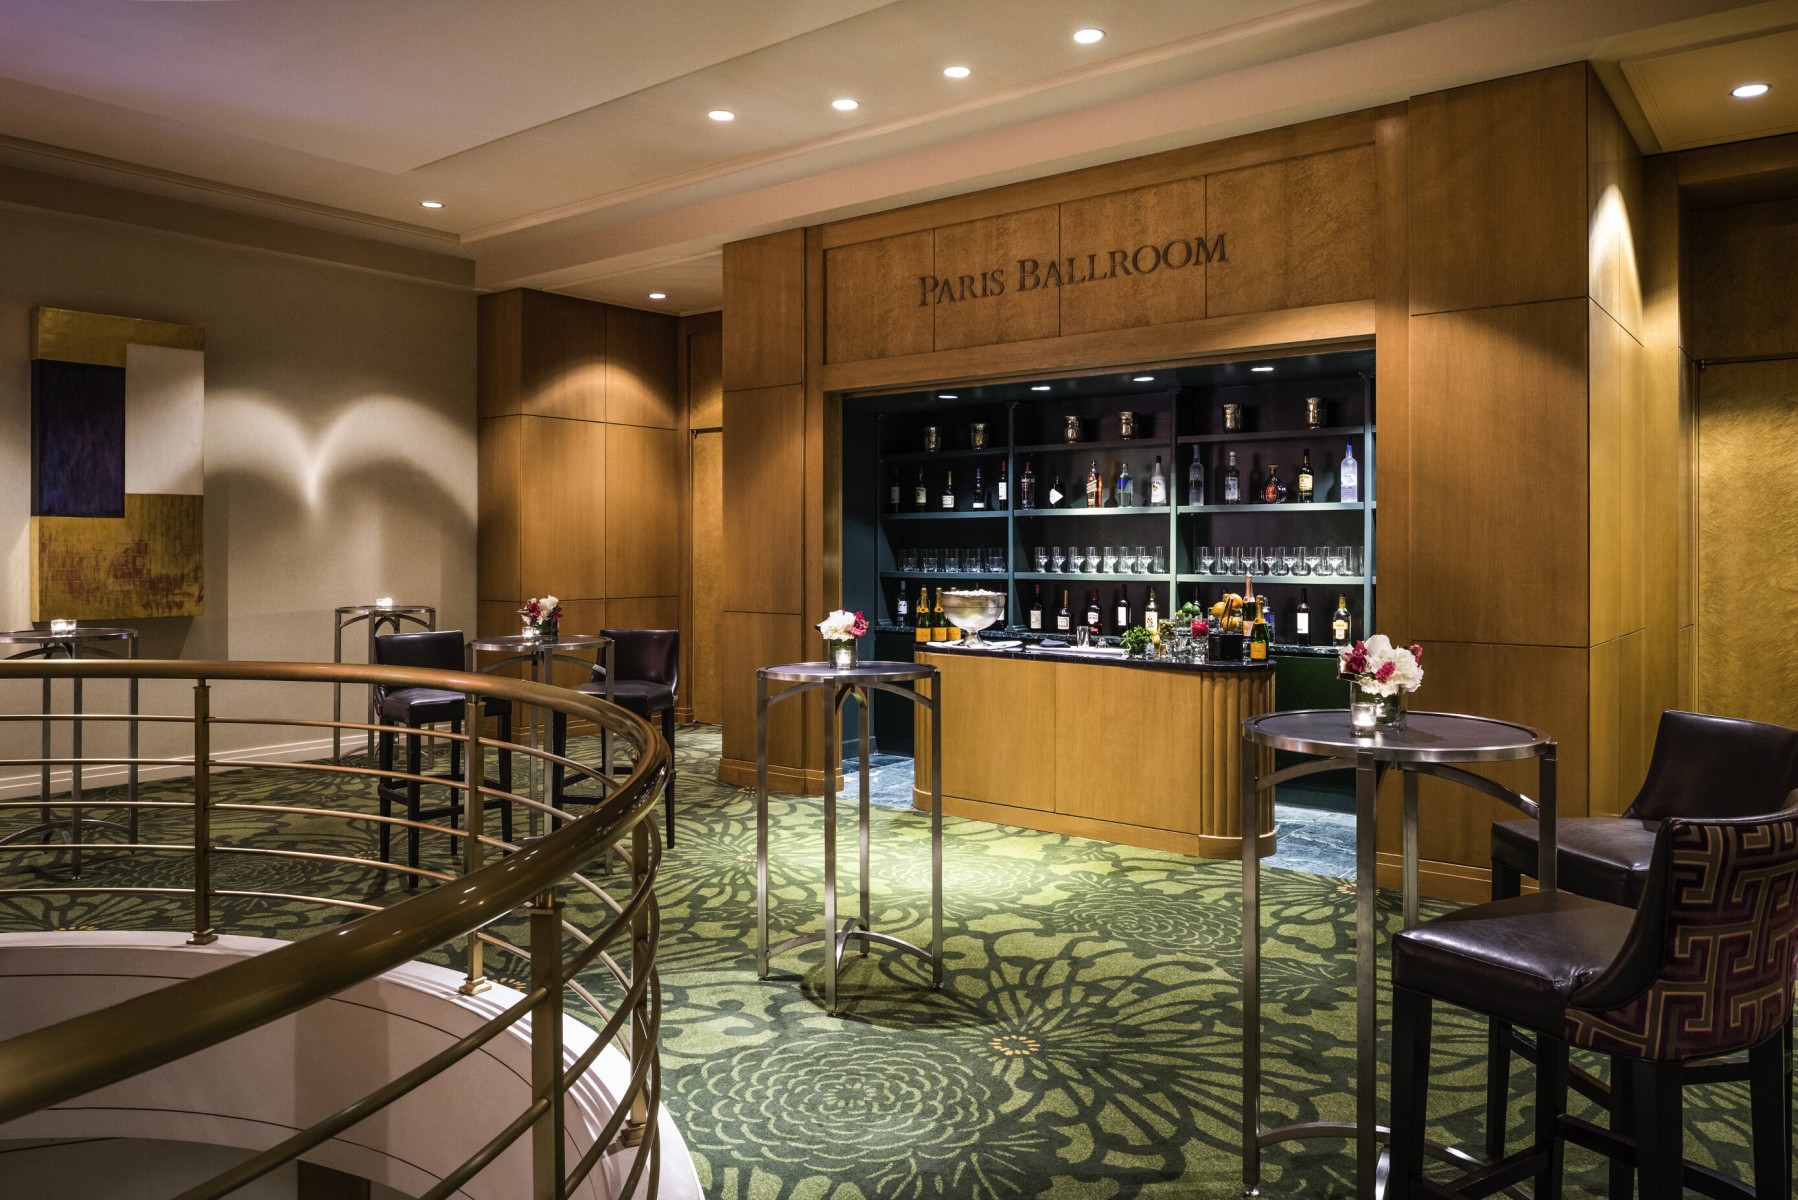 Photo of the hotel Sofitel New York: Paris ballroom foyer